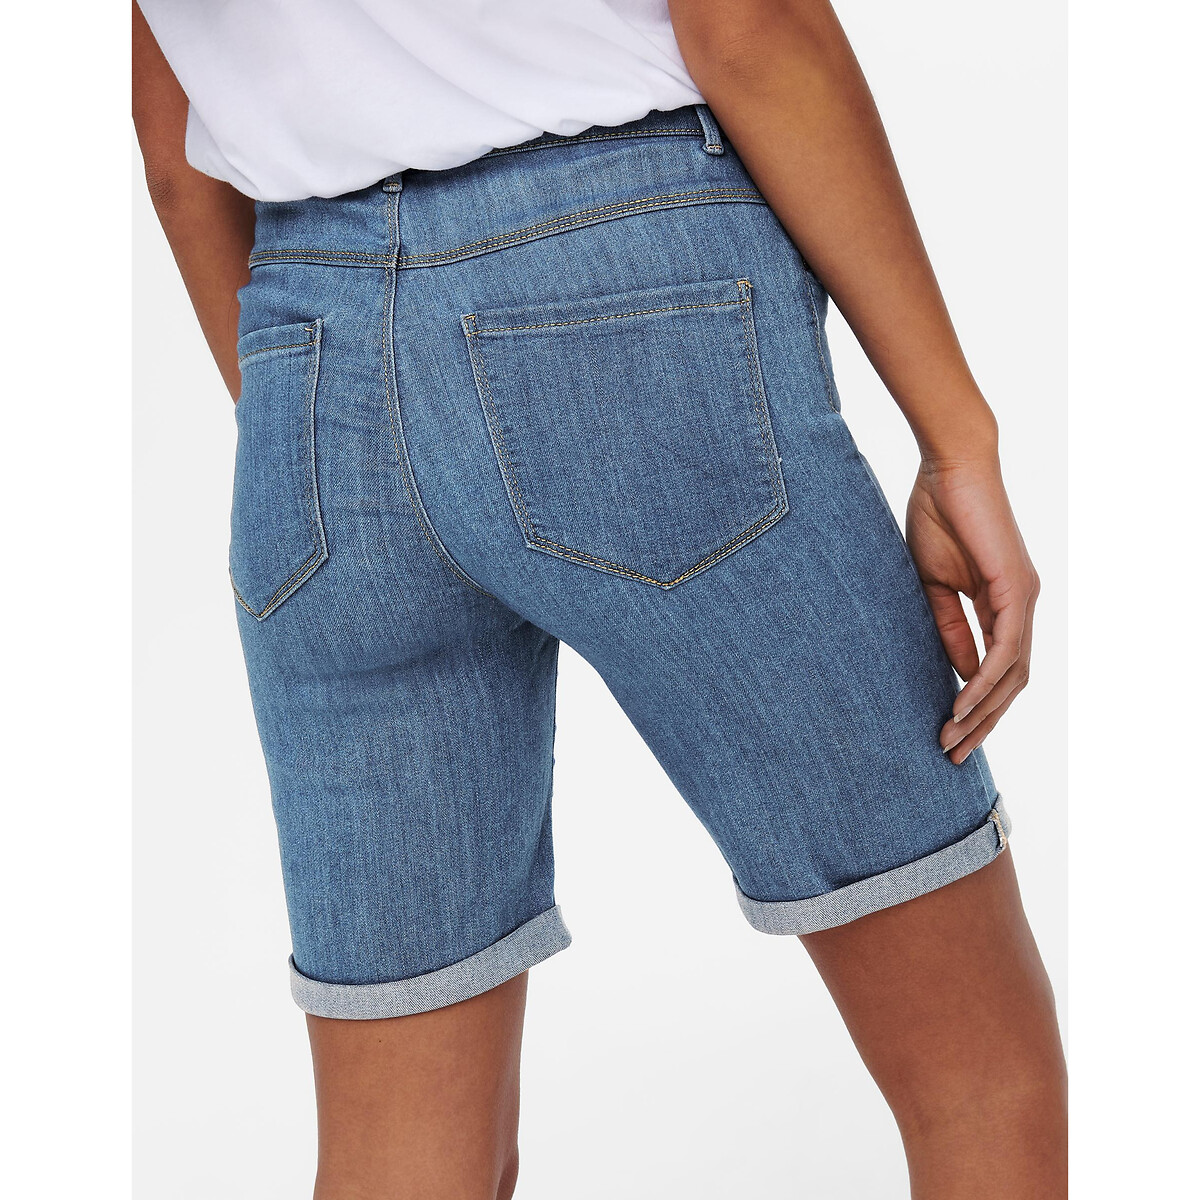 Бермуды Из джинсовой ткани L синий LaRedoute, размер L - фото 3